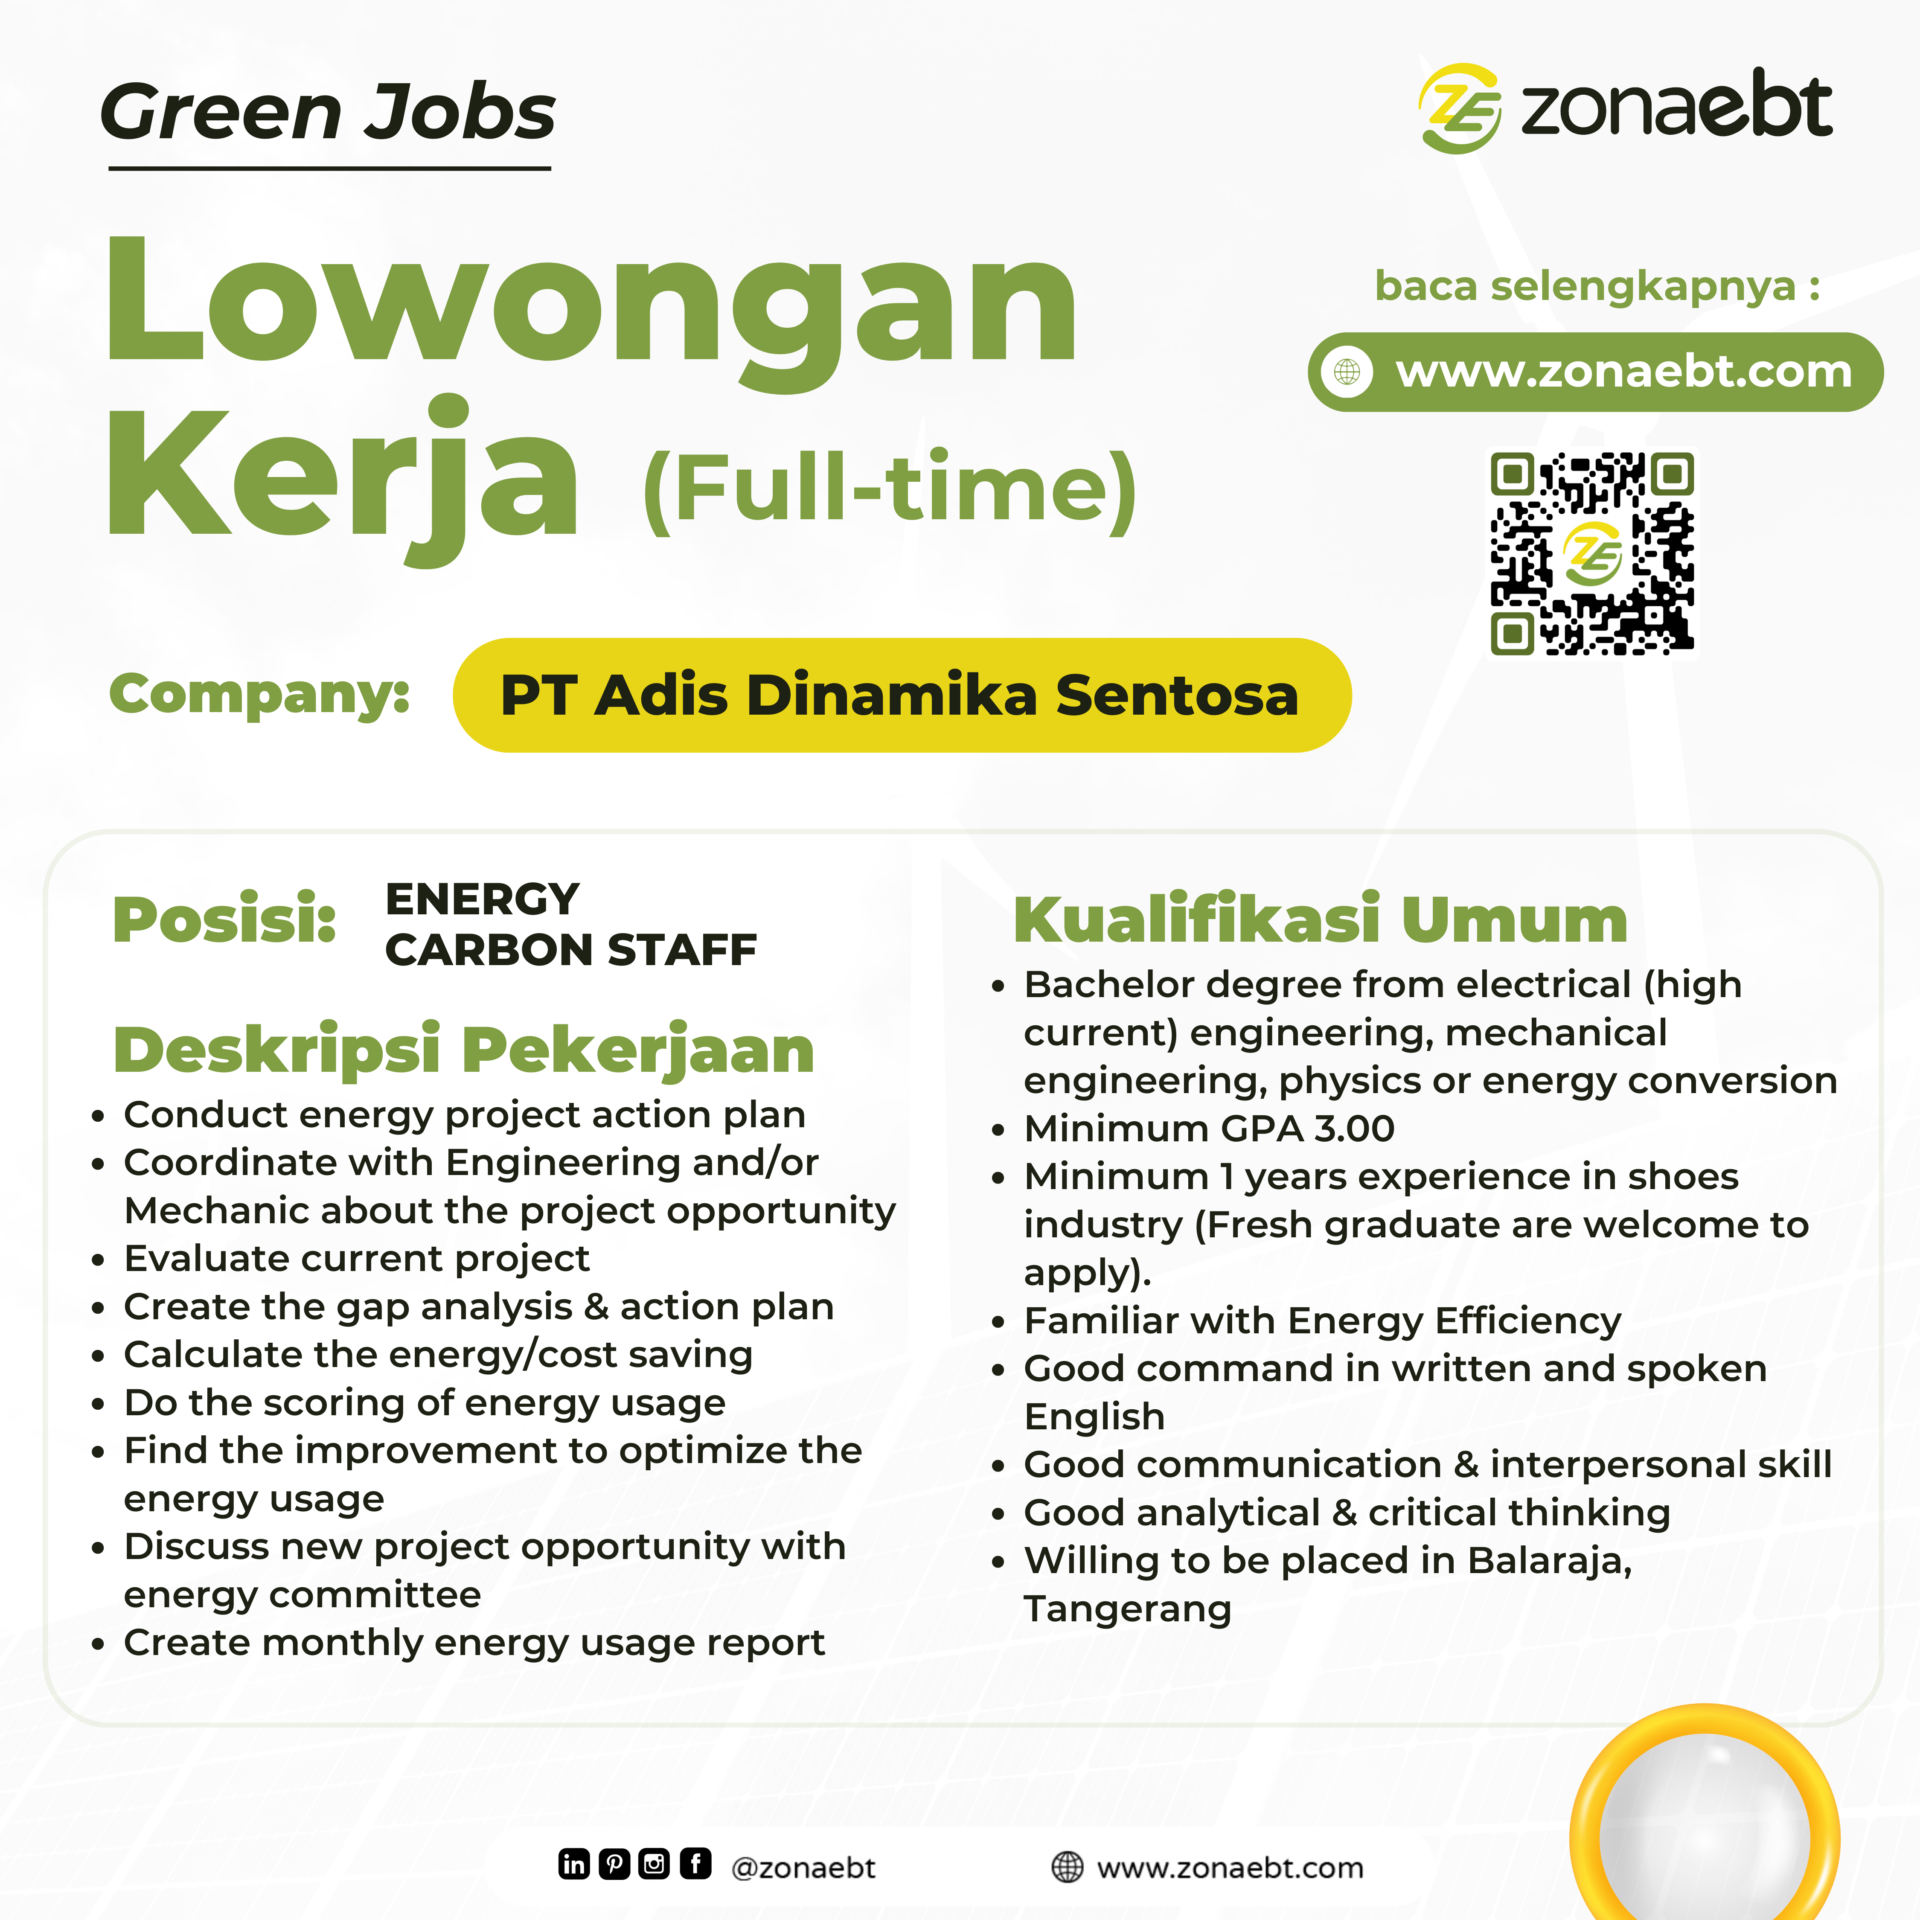 Post ENERGY CARBON STAFF green jobs zonaebt.com